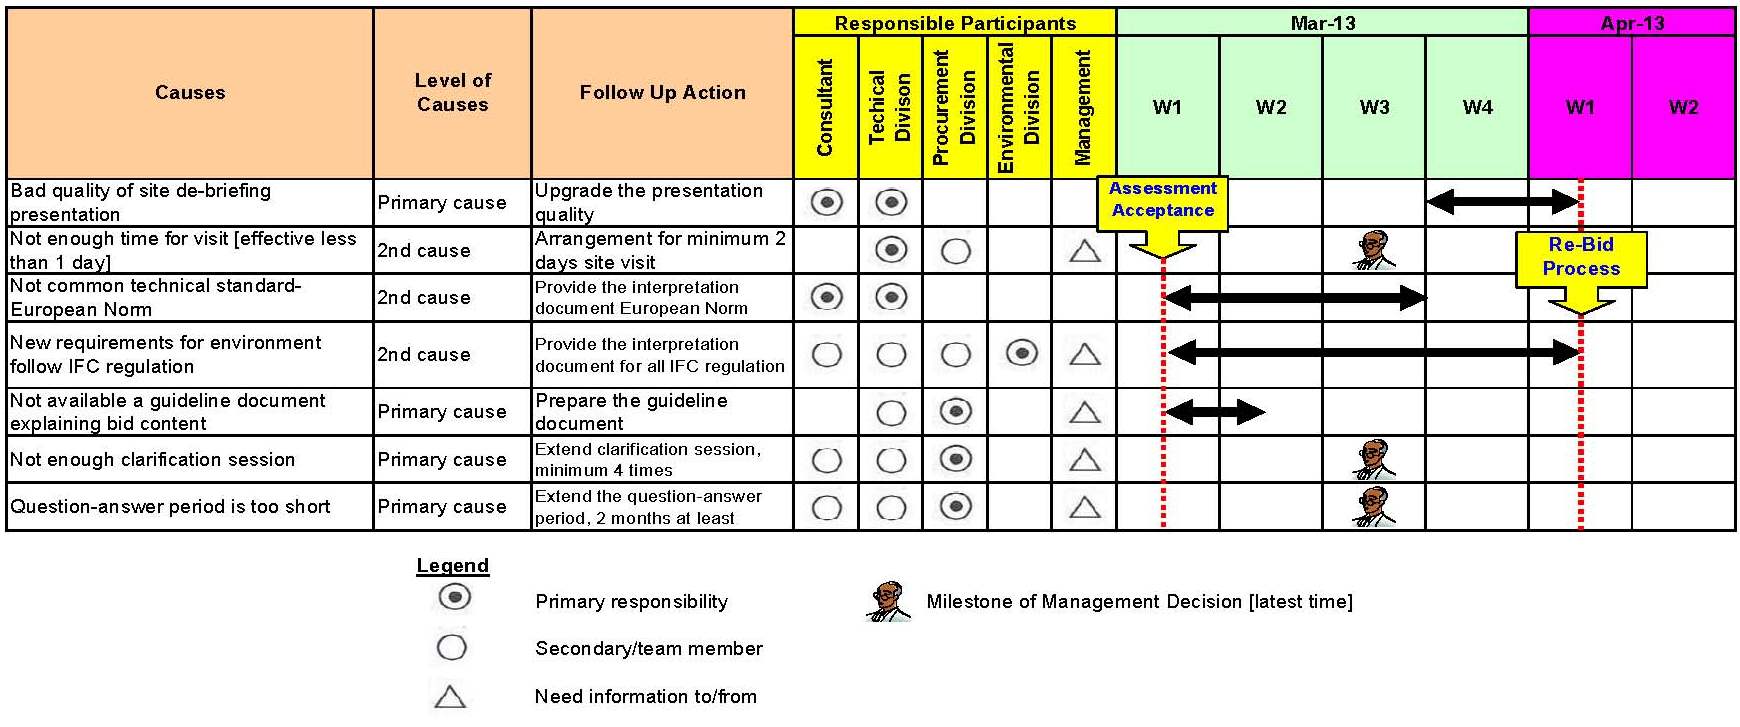 employee performance matrix template